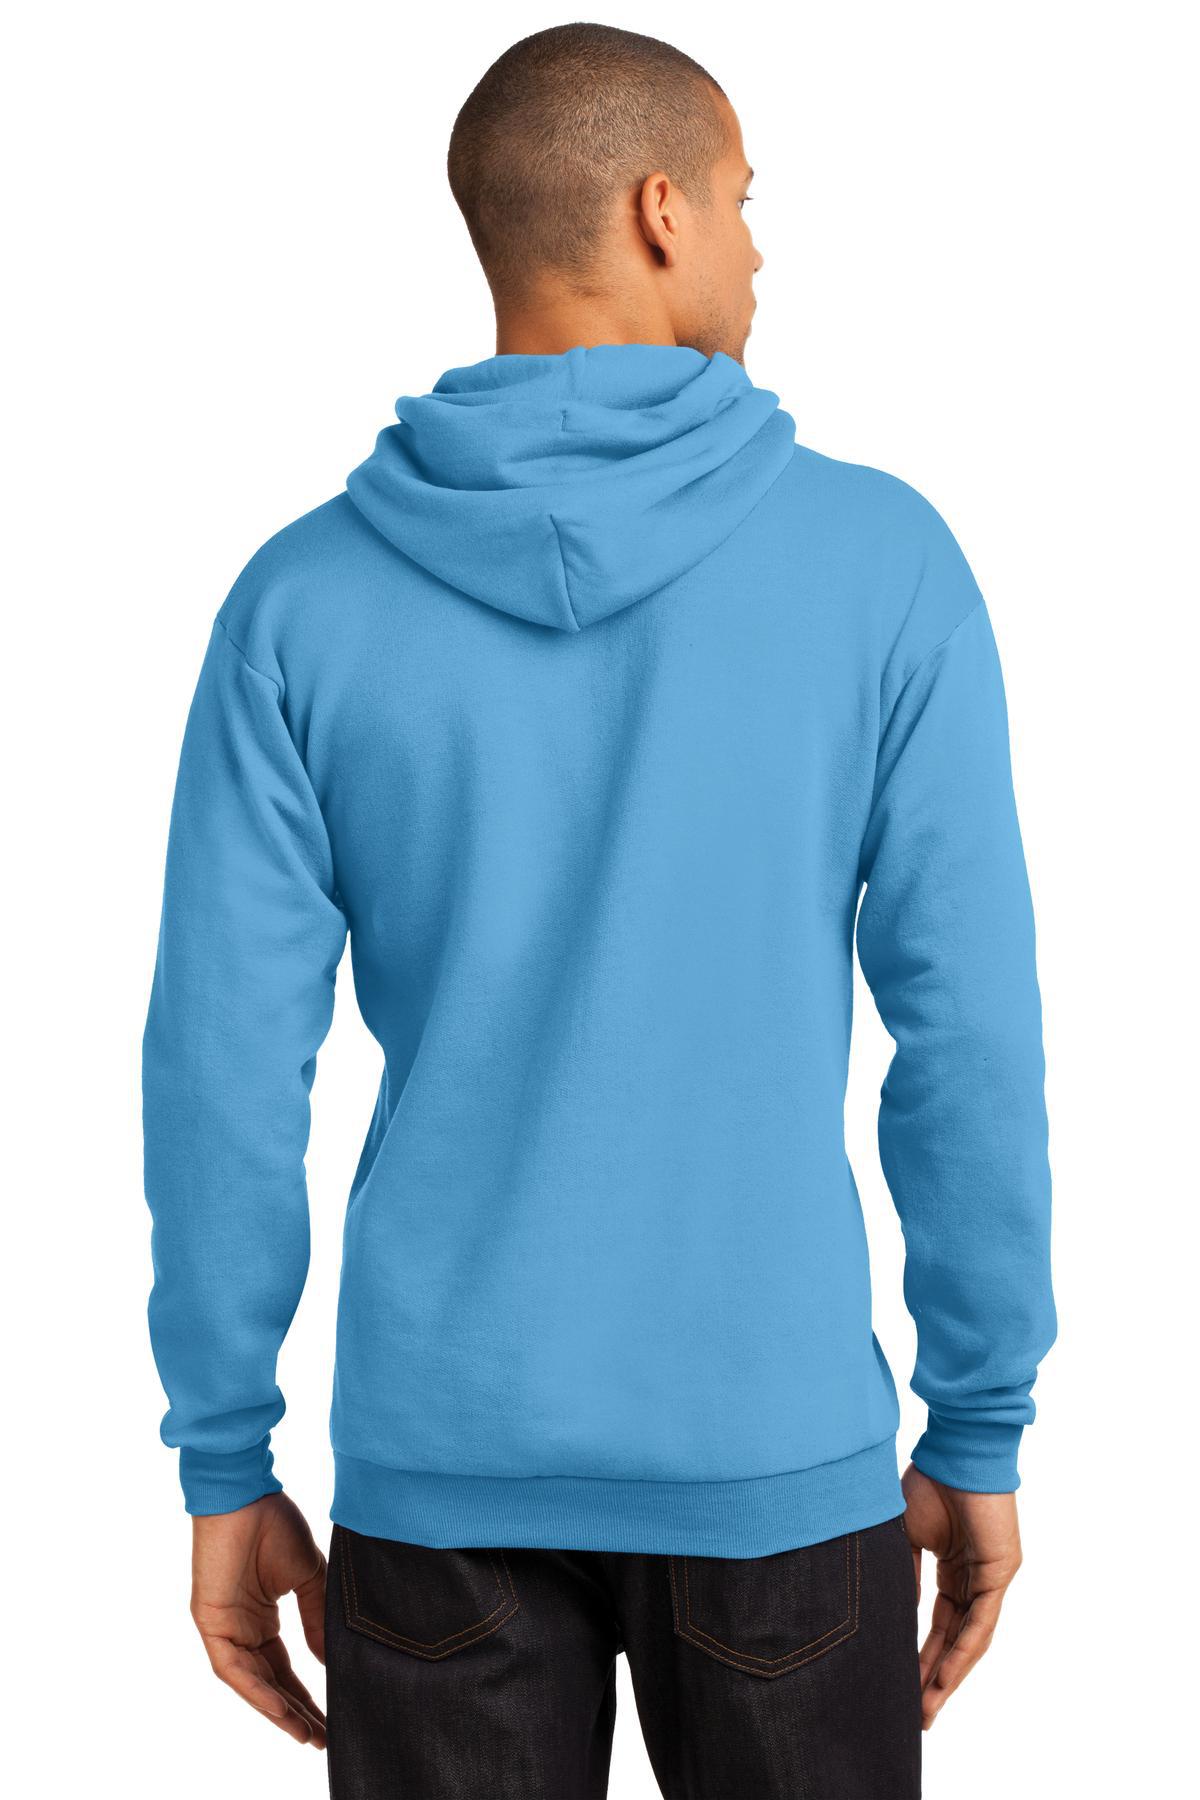 Port & Company PC78H Core Fleece Pullover Hooded Sweatshirt - Shirtmax